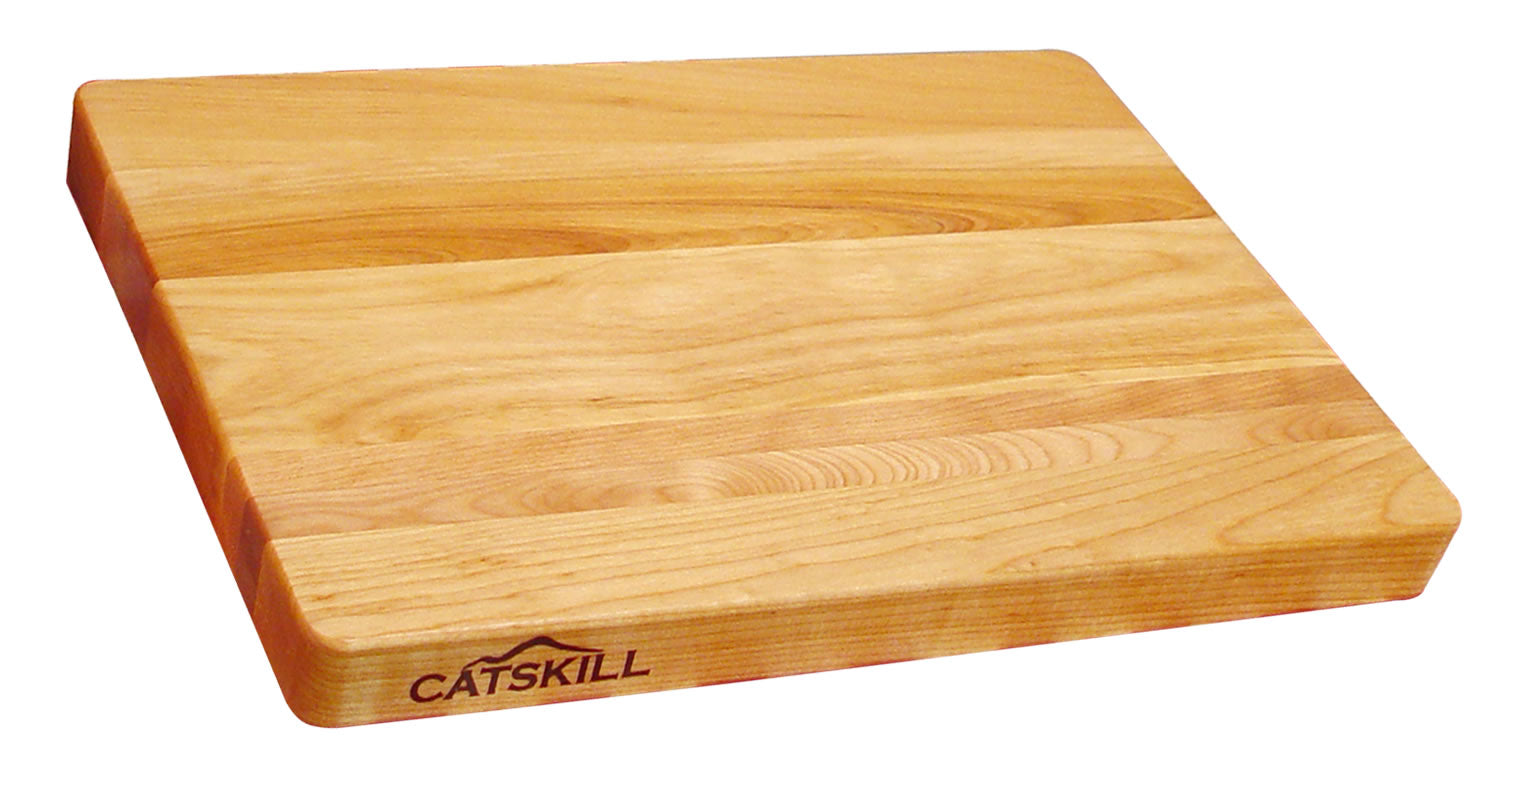 Catskill Craftsmen Professional Board 15" x 11"